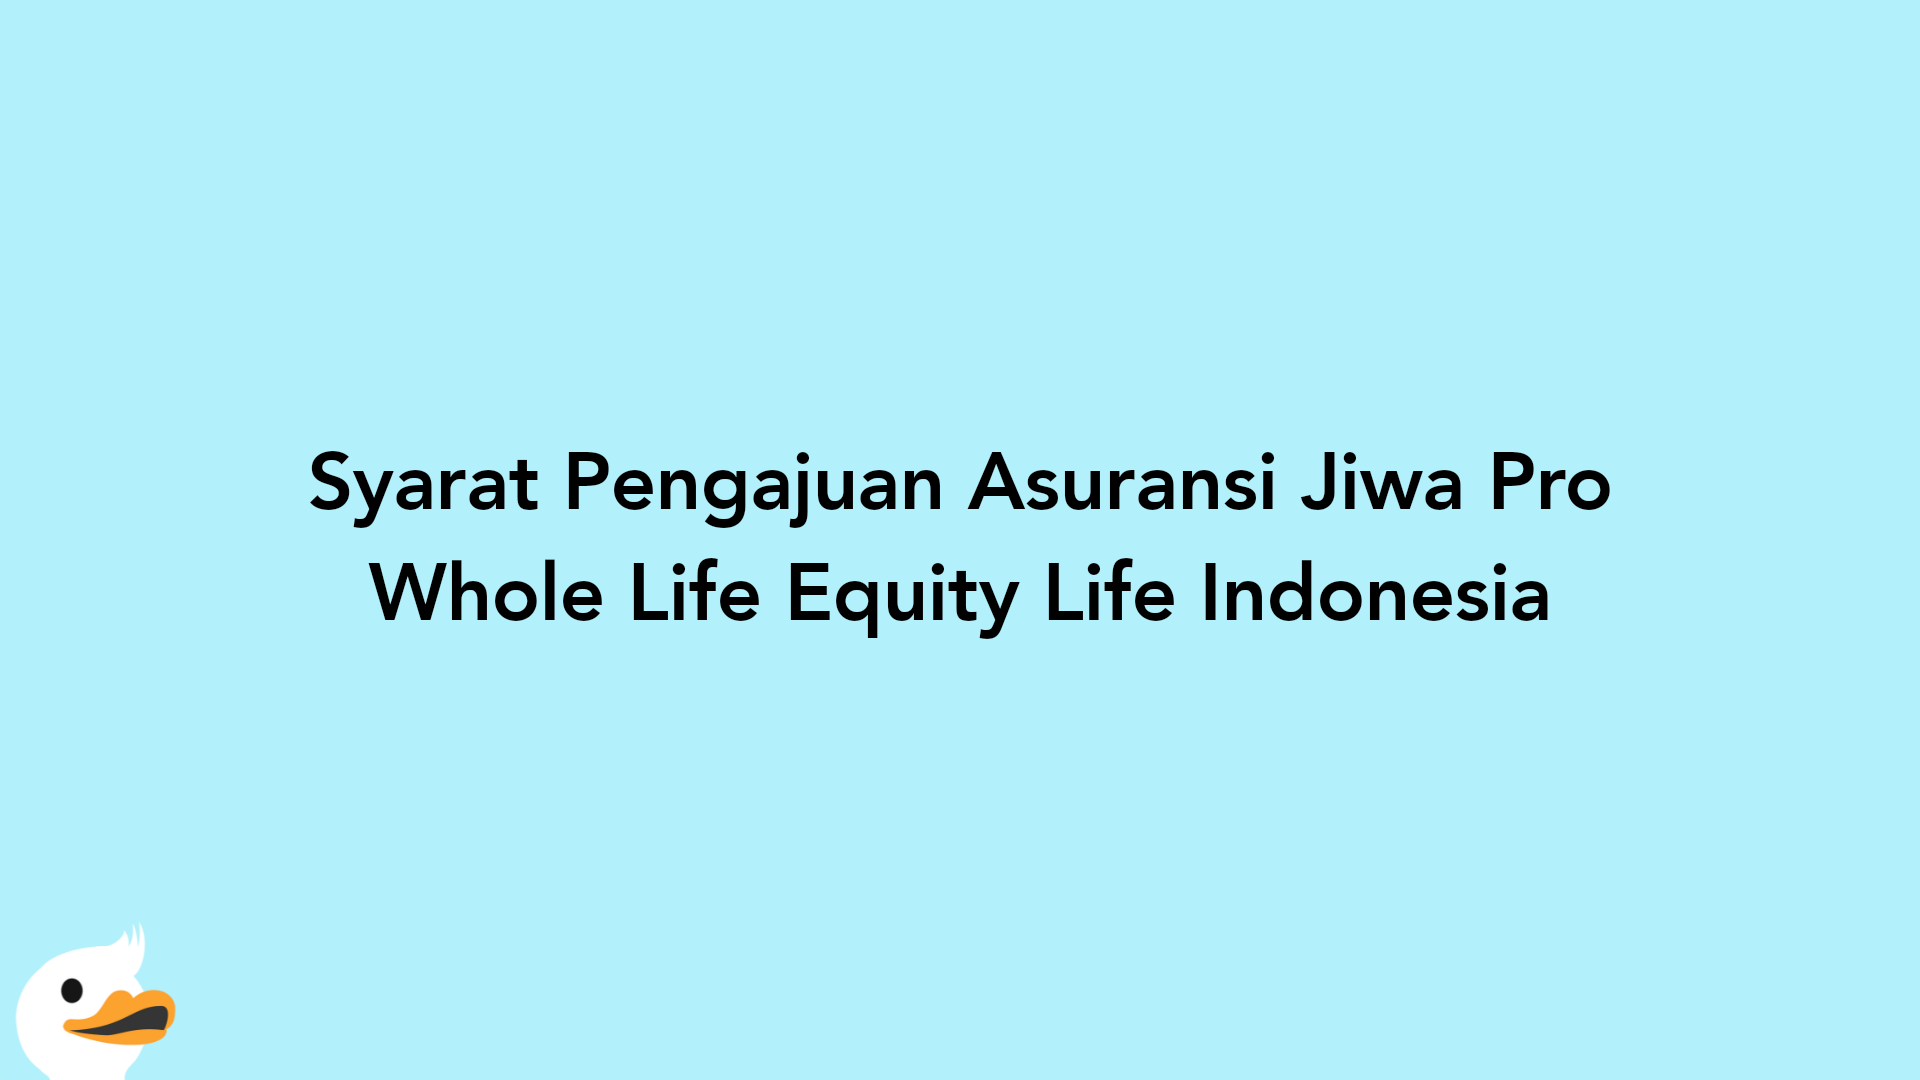 Syarat Pengajuan Asuransi Jiwa Pro Whole Life Equity Life Indonesia